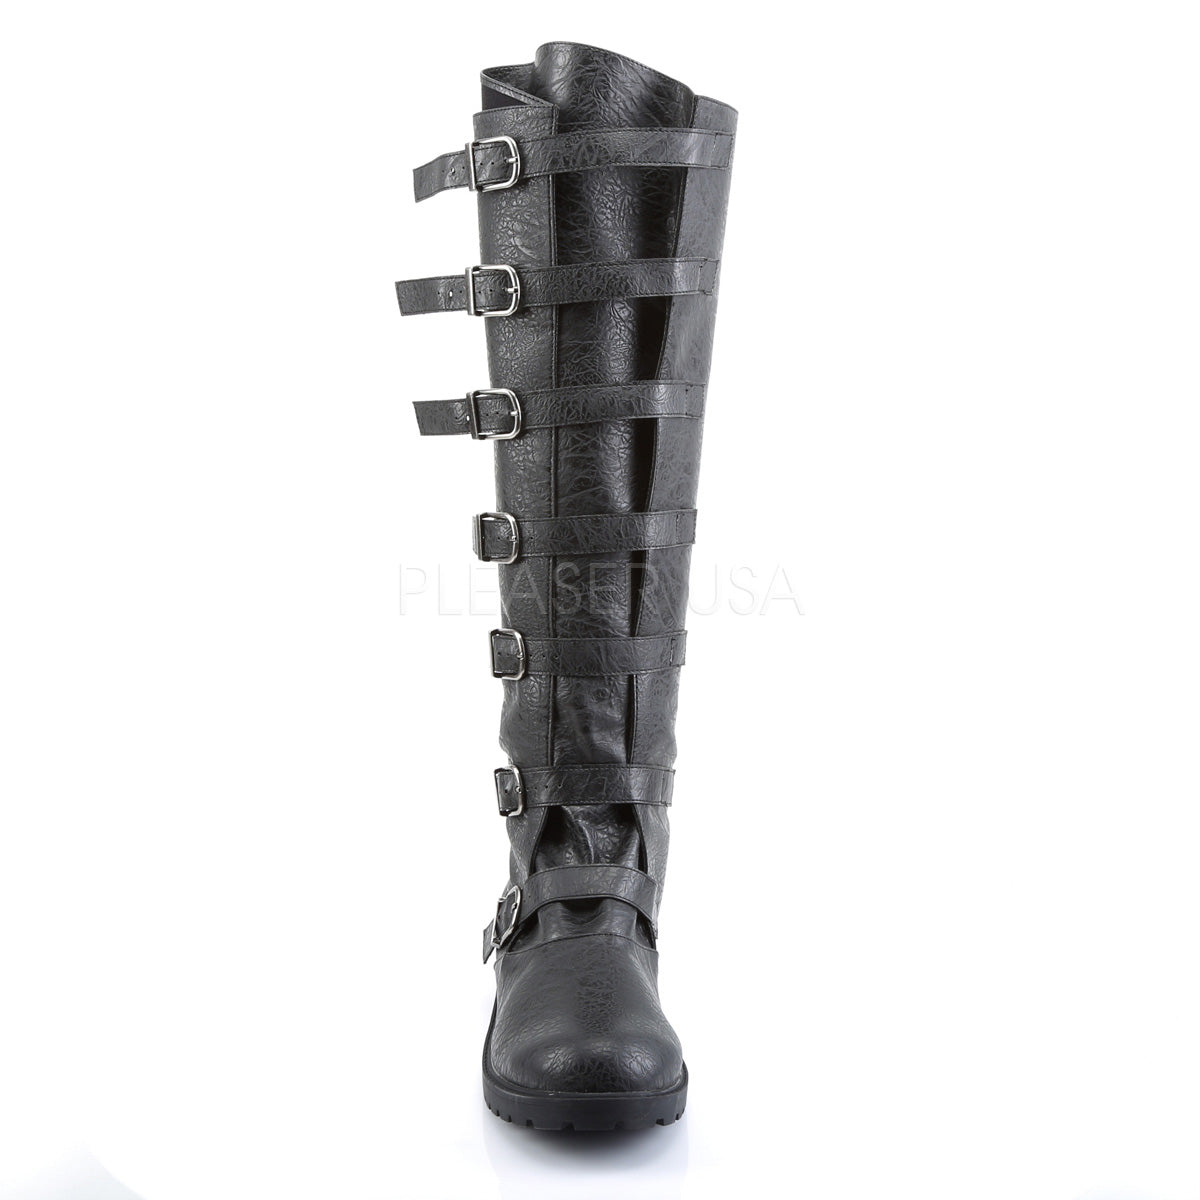 Post Apocalyptic Boots Black